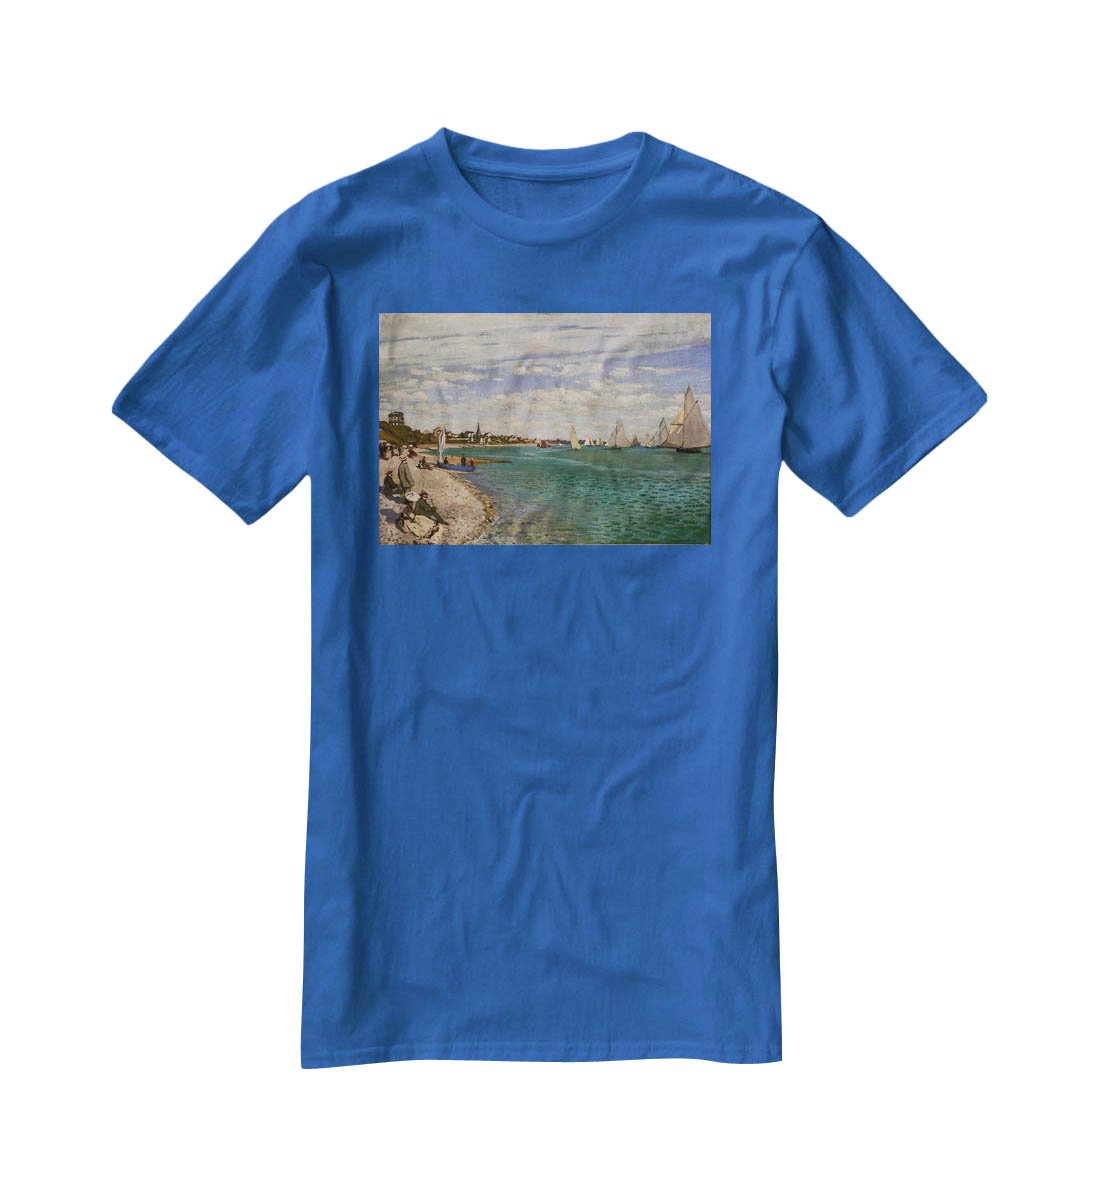 Regatta at St. Adresse by Monet T-Shirt - Canvas Art Rocks - 2